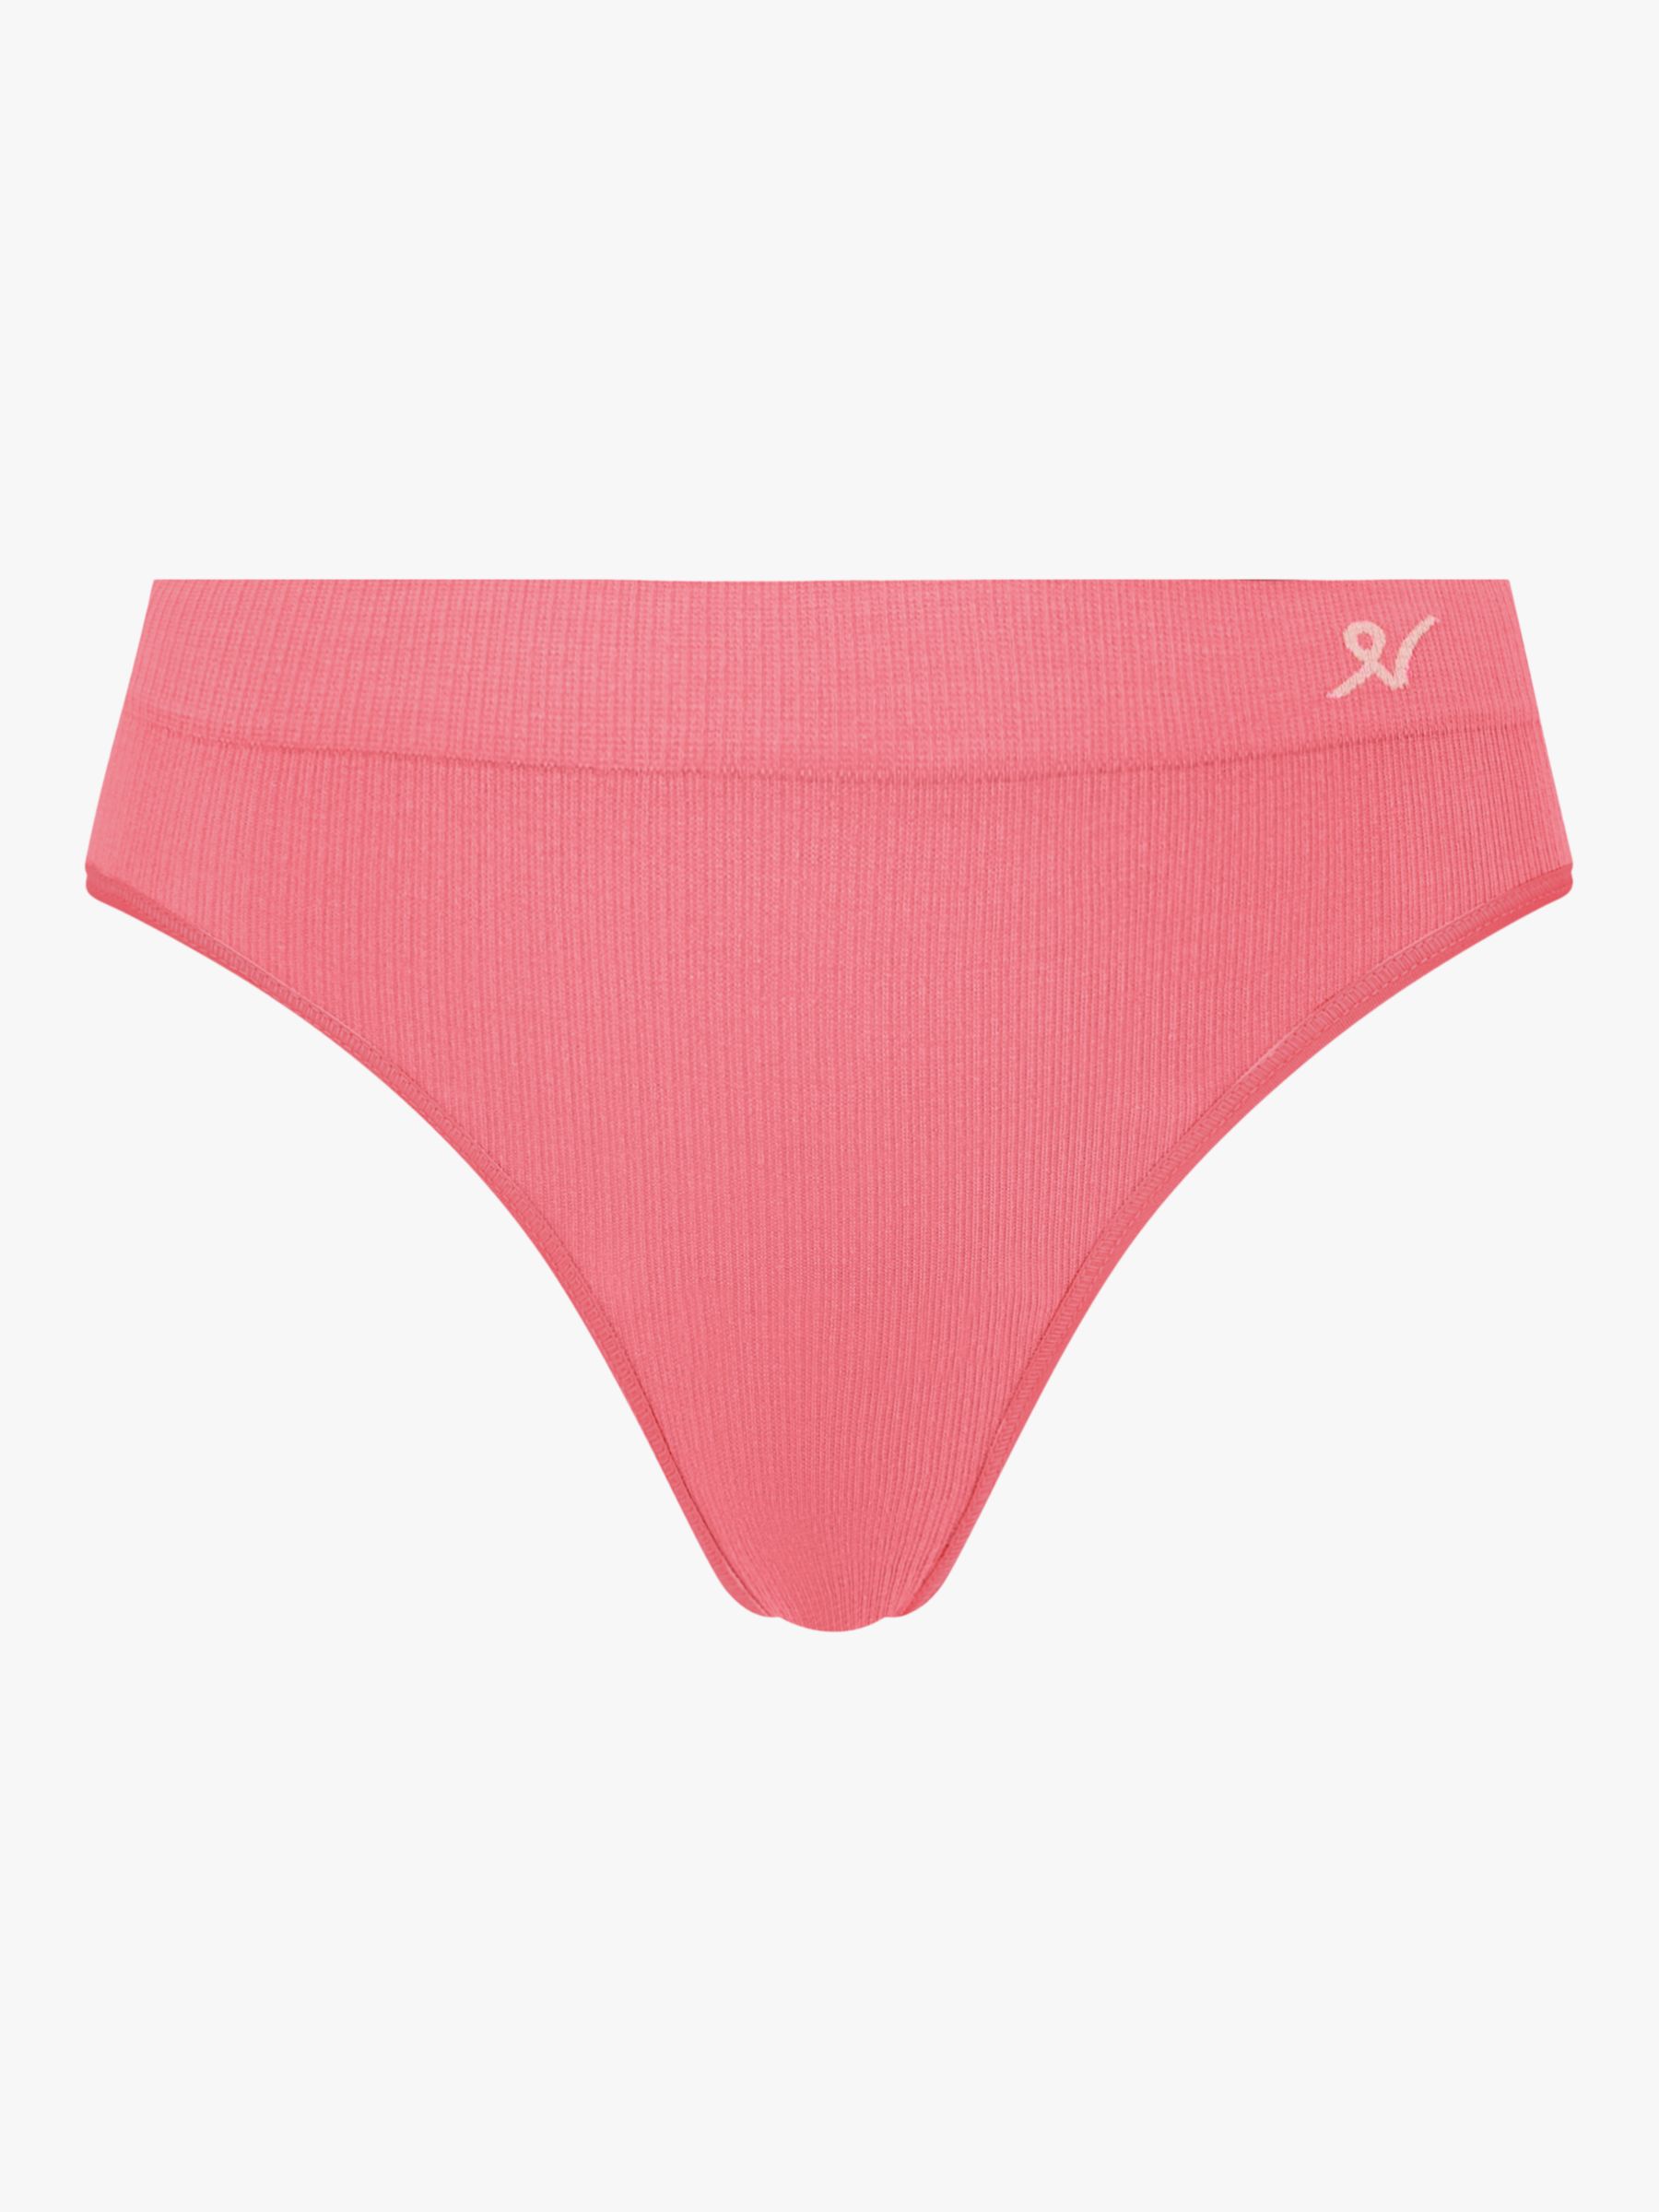 Nudea Seamless High-Leg Briefs, Rose Pink at John Lewis & Partners